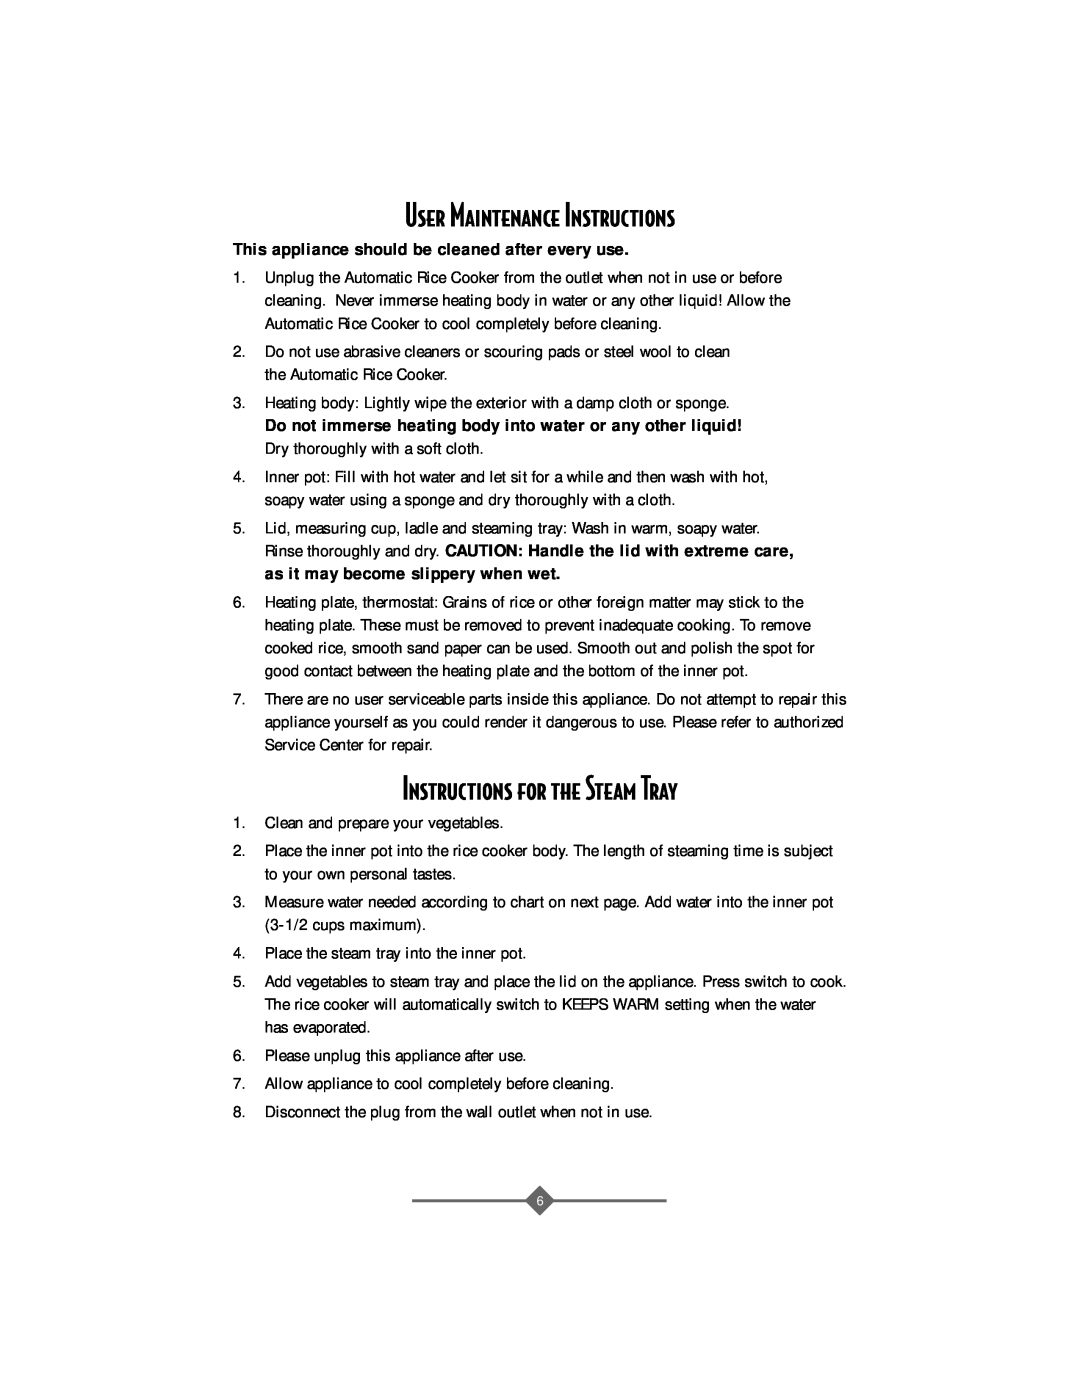 Sunbeam 4706, 4708 instruction manual User Maintenance Instructions, Instructions for the Steam Tray 